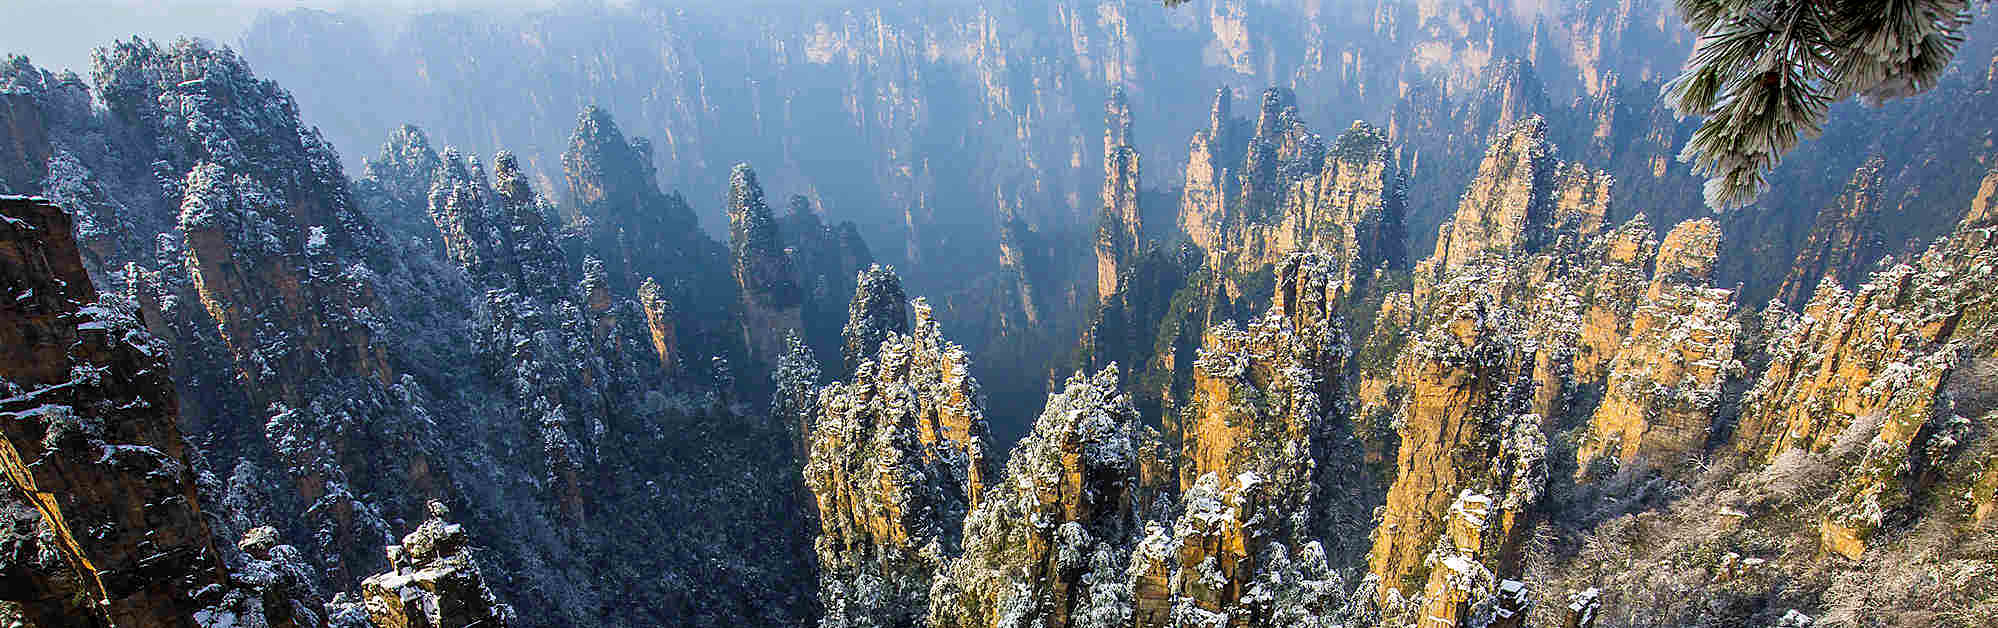 One-Day Zhangjiajie National Forest Park Tour